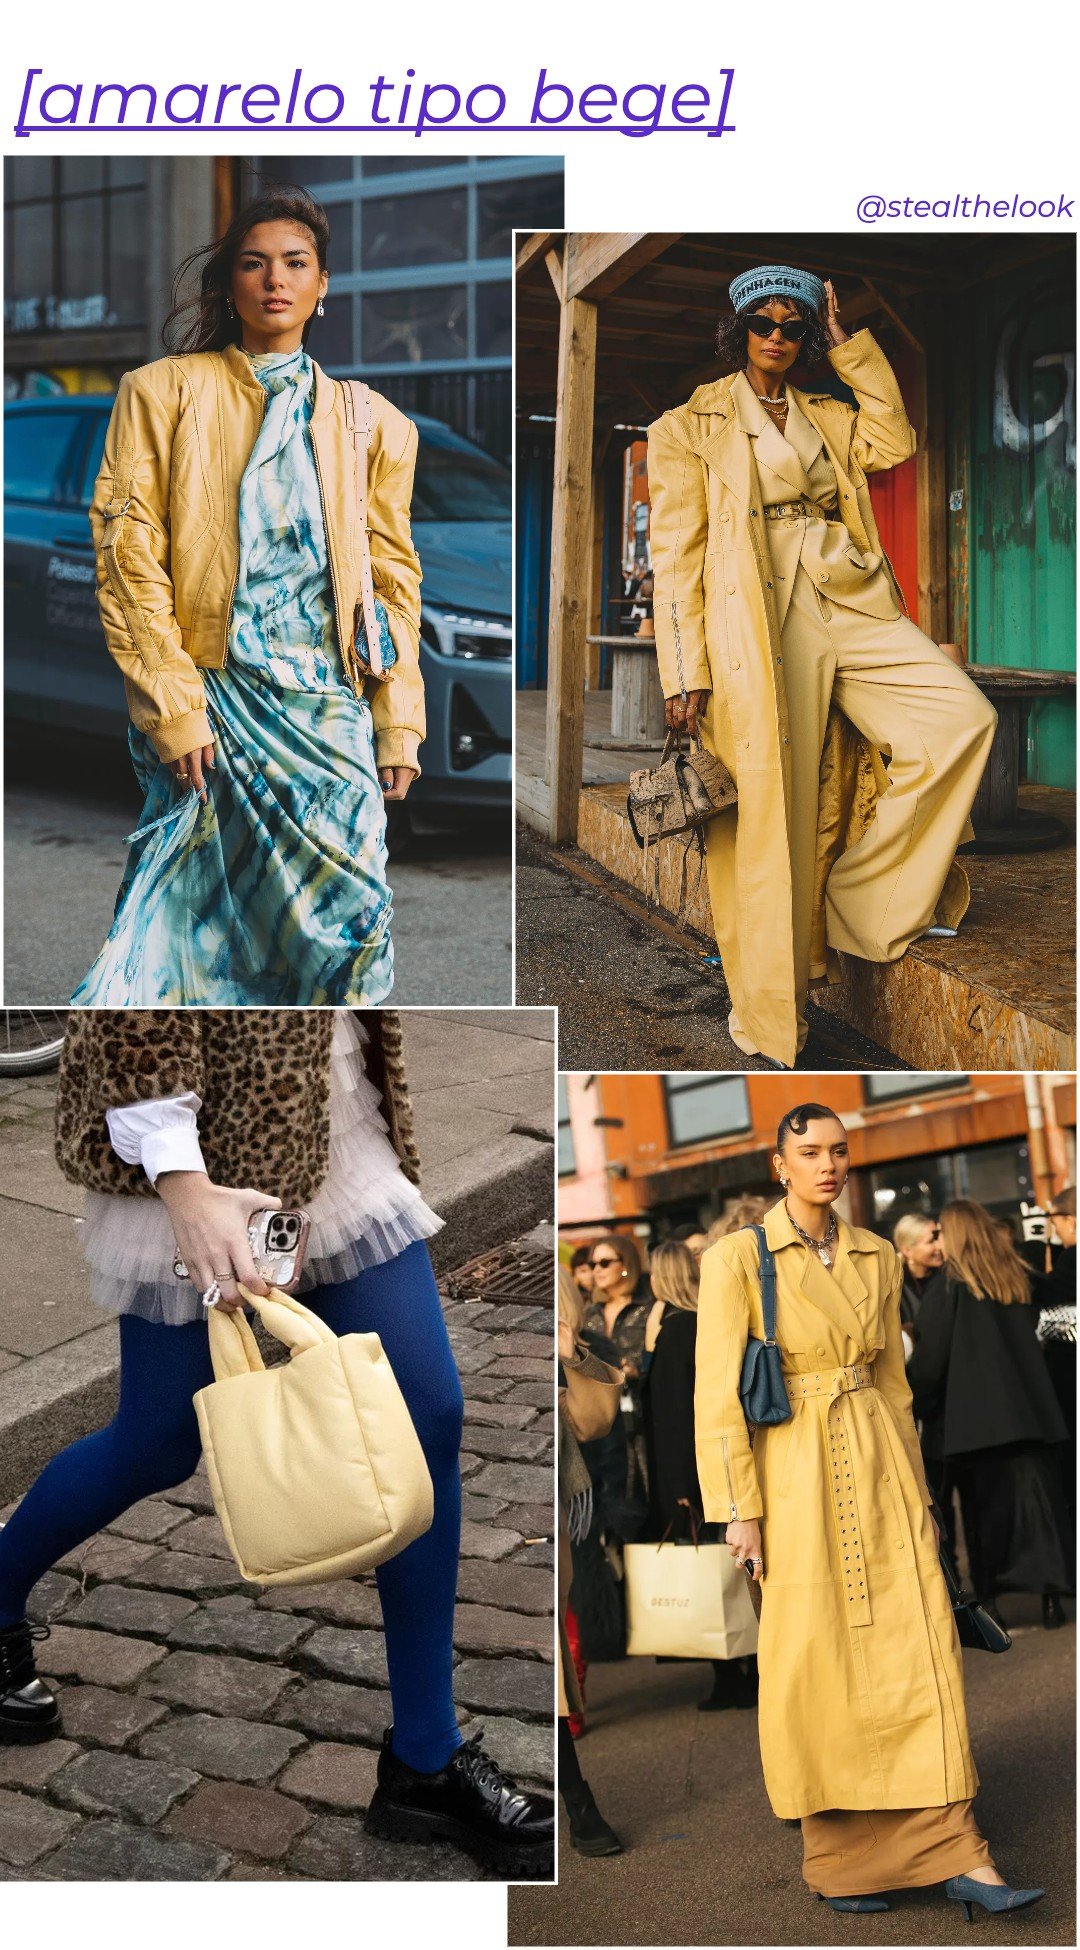 Amarelo - Tendências do street style - Tendências do street style - Inverno - Copenhagen Fashion Week - https://stealthelook.com.br